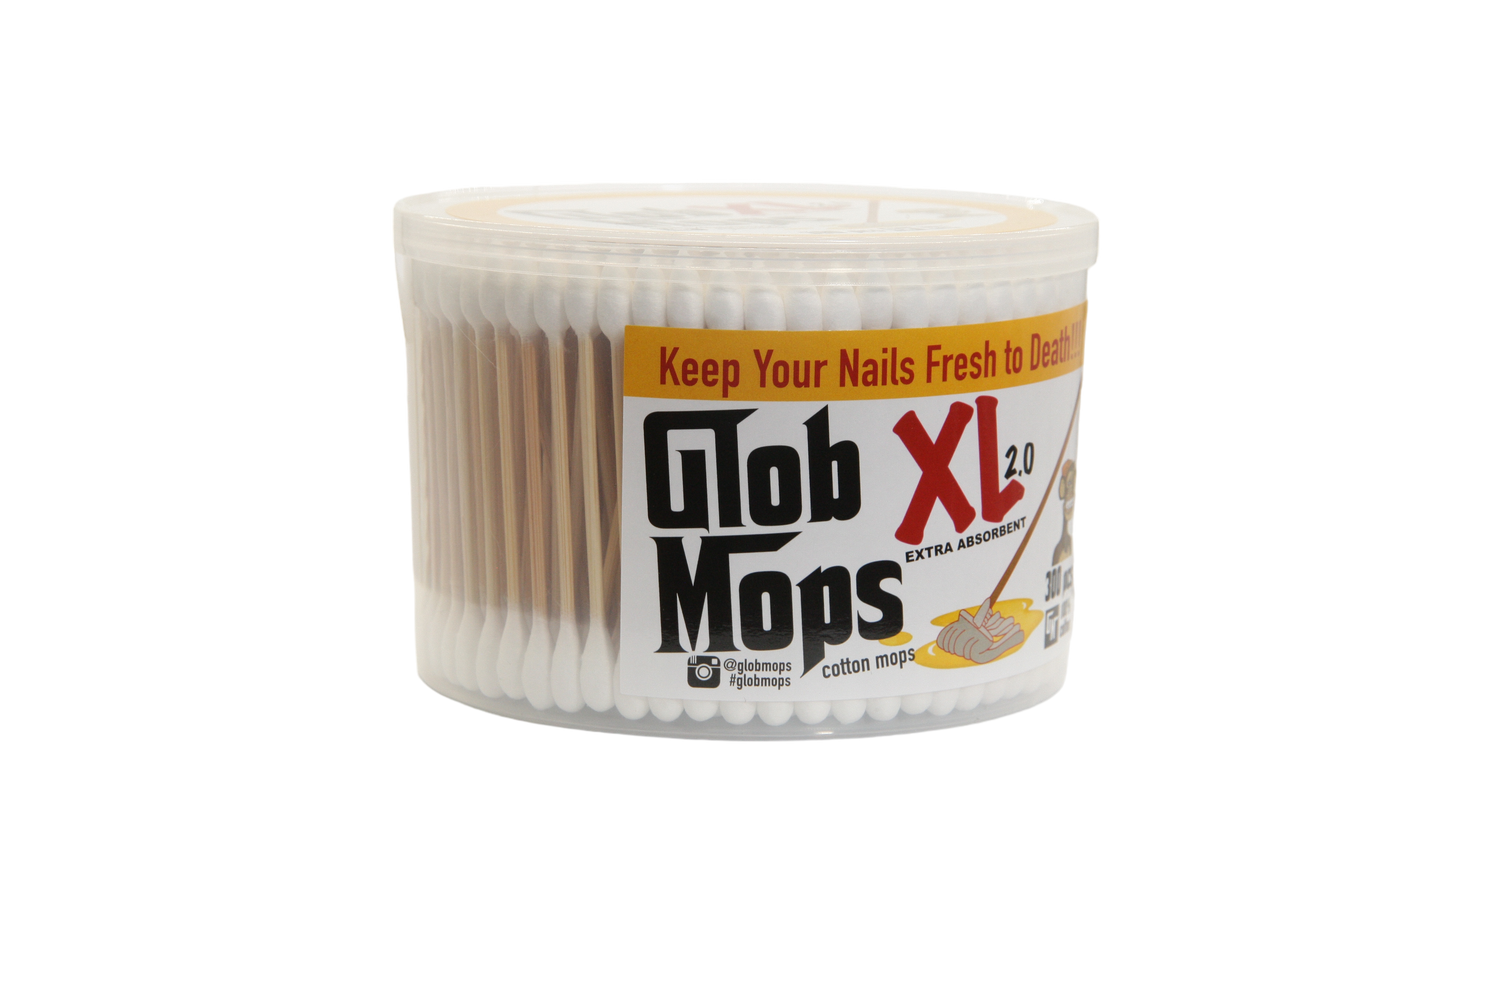 Glob Mops - XL 2.0